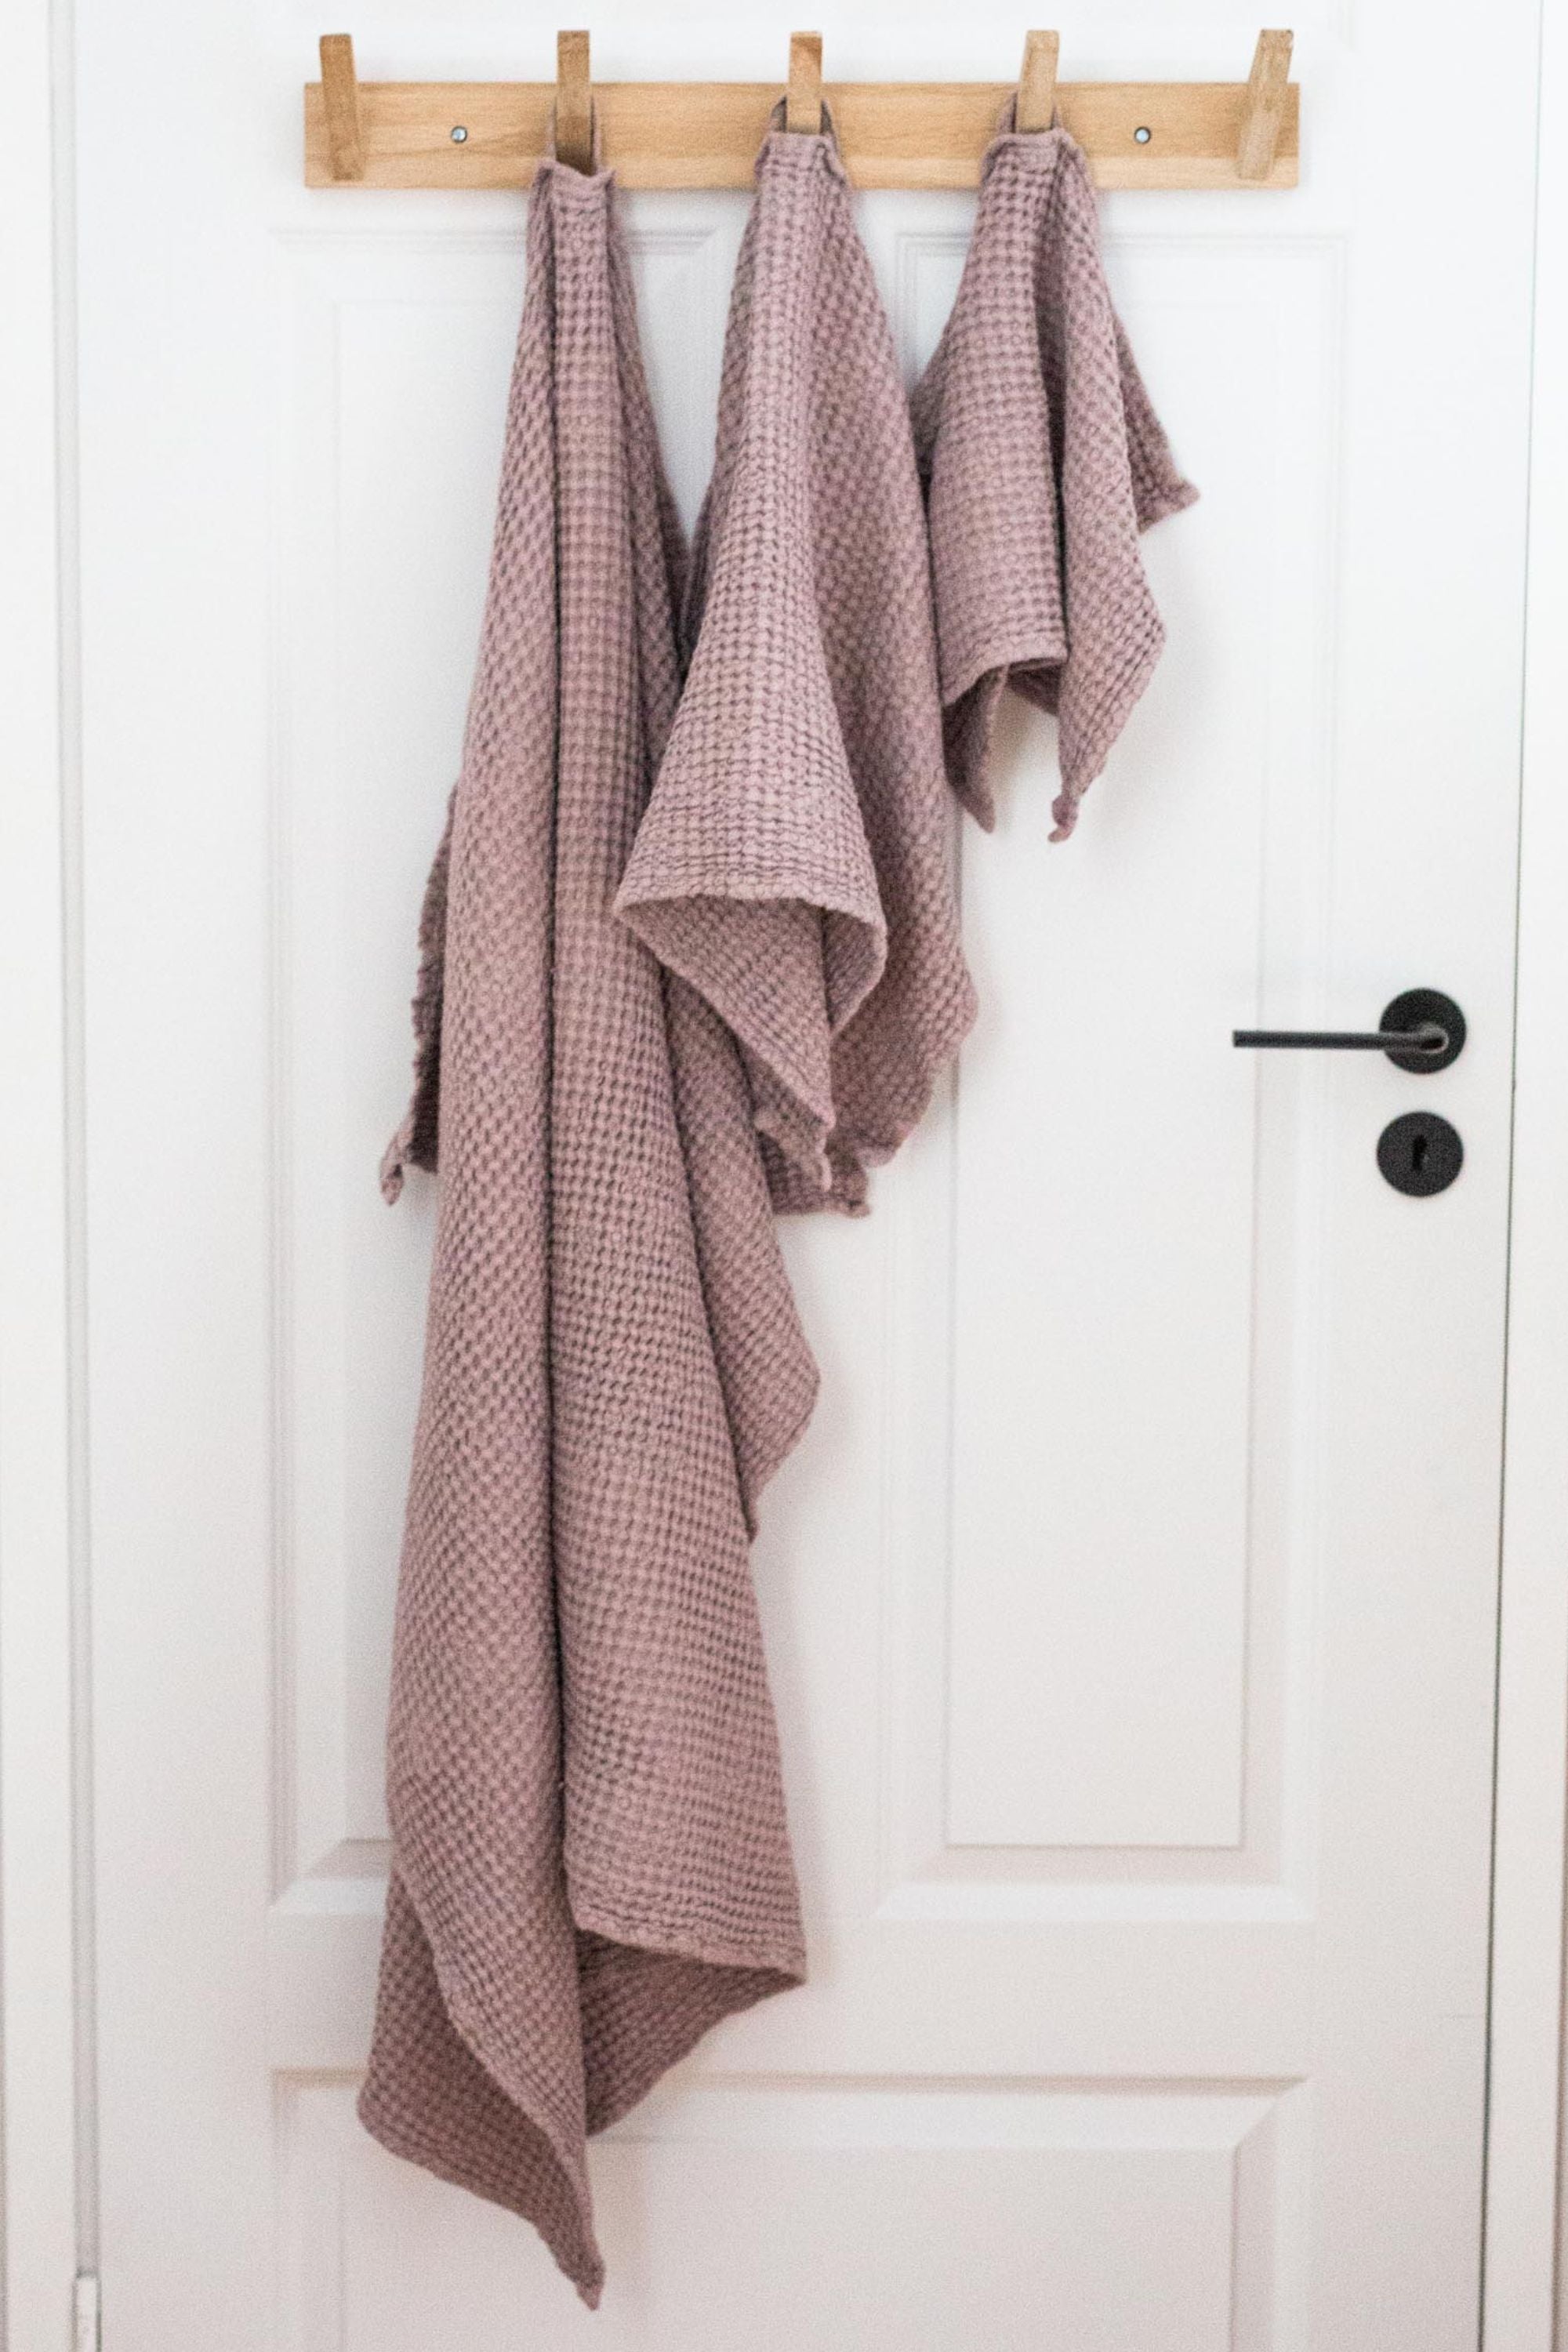 Linen Bath Towel Set. Soft Waffle Linen Towels For Face, Hands and Bat –  Isole Linen